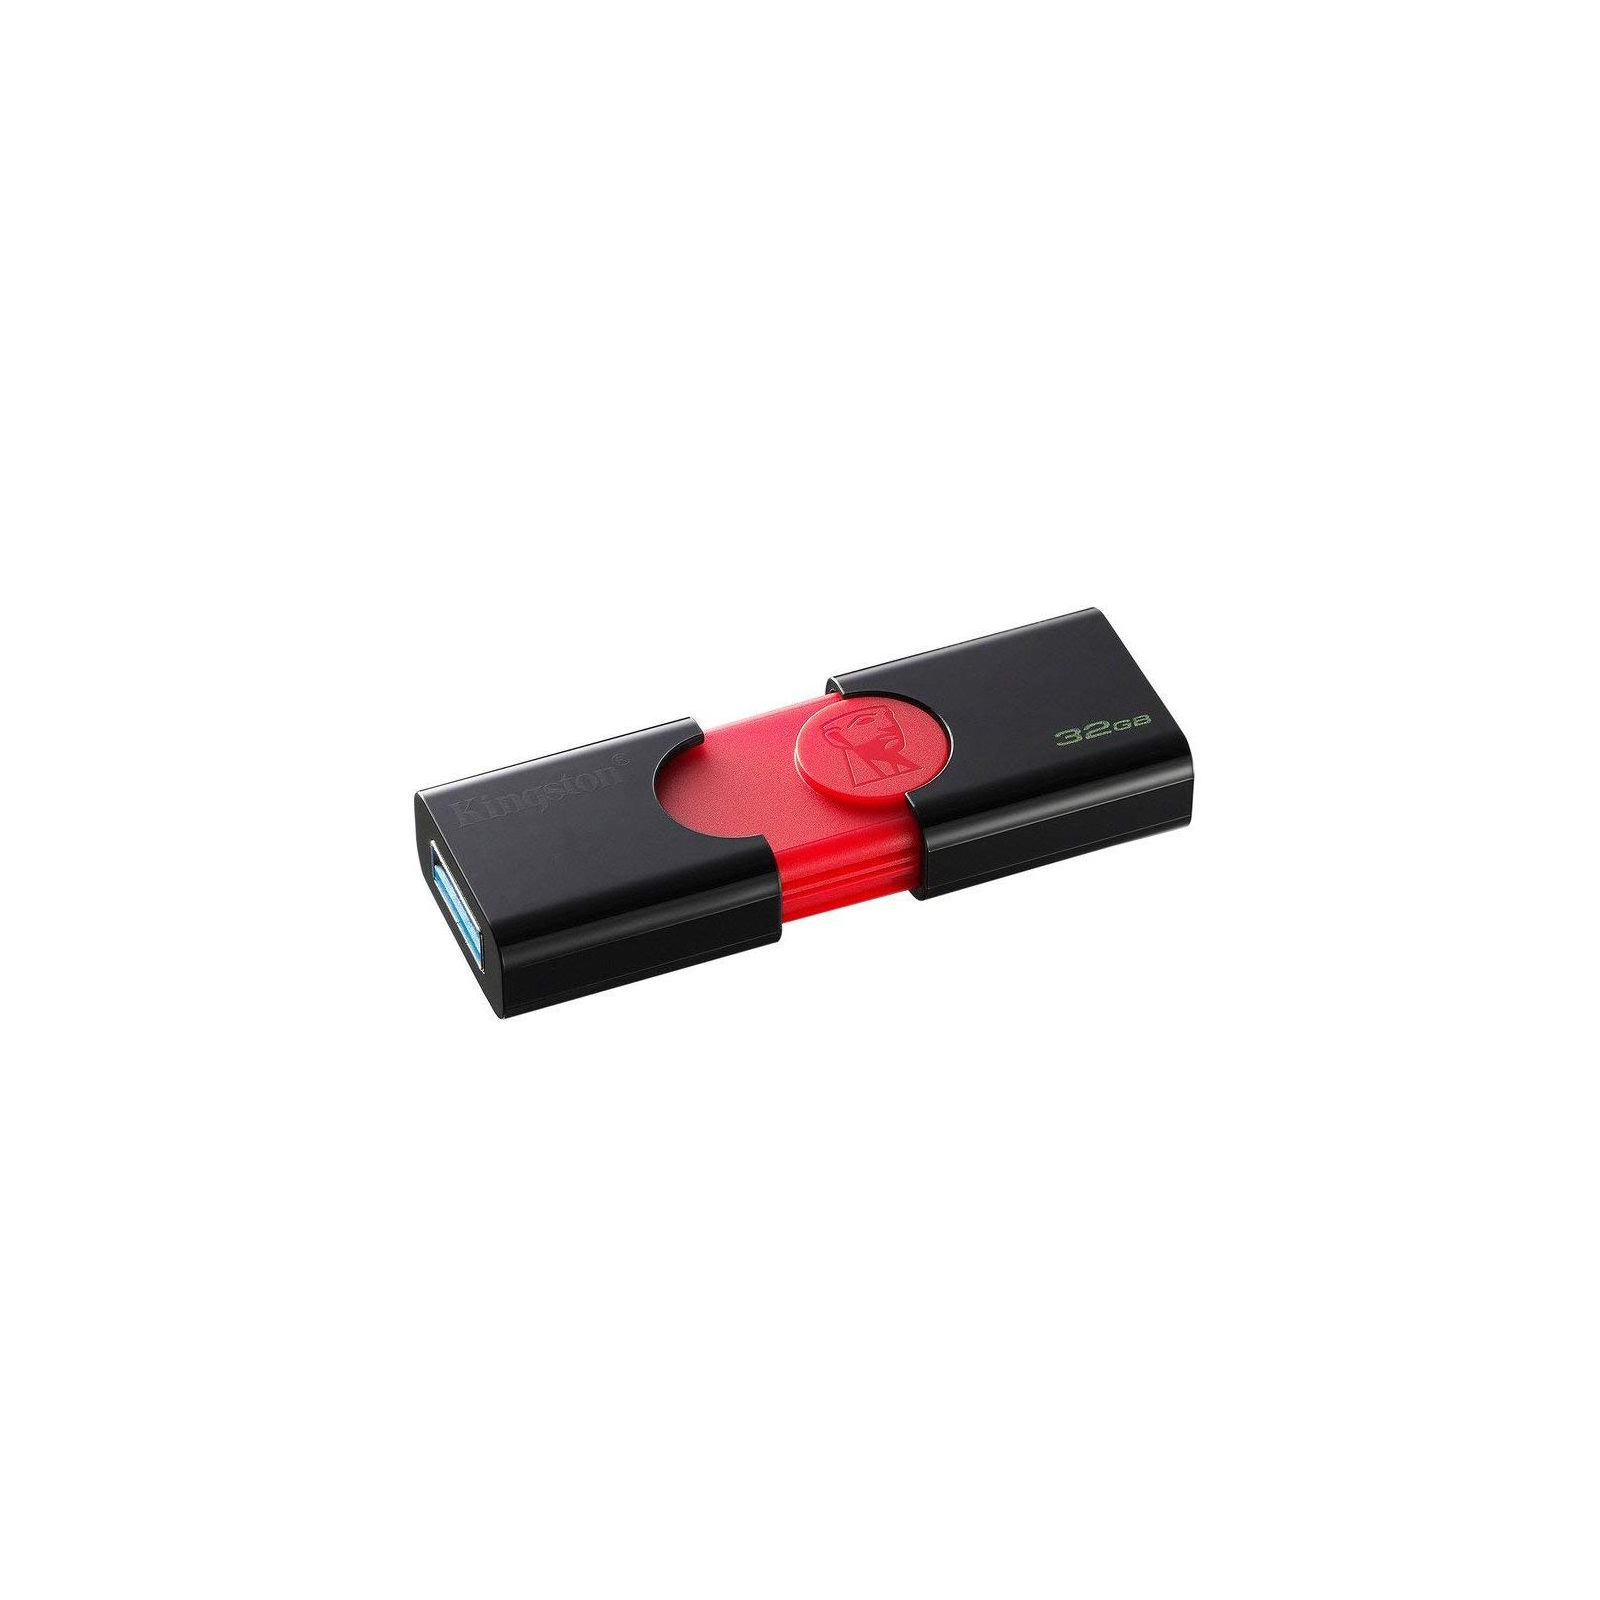 USB флеш накопитель Kingston 32GB DT106 USB 3.0 (DT106/32GB) изображение 5